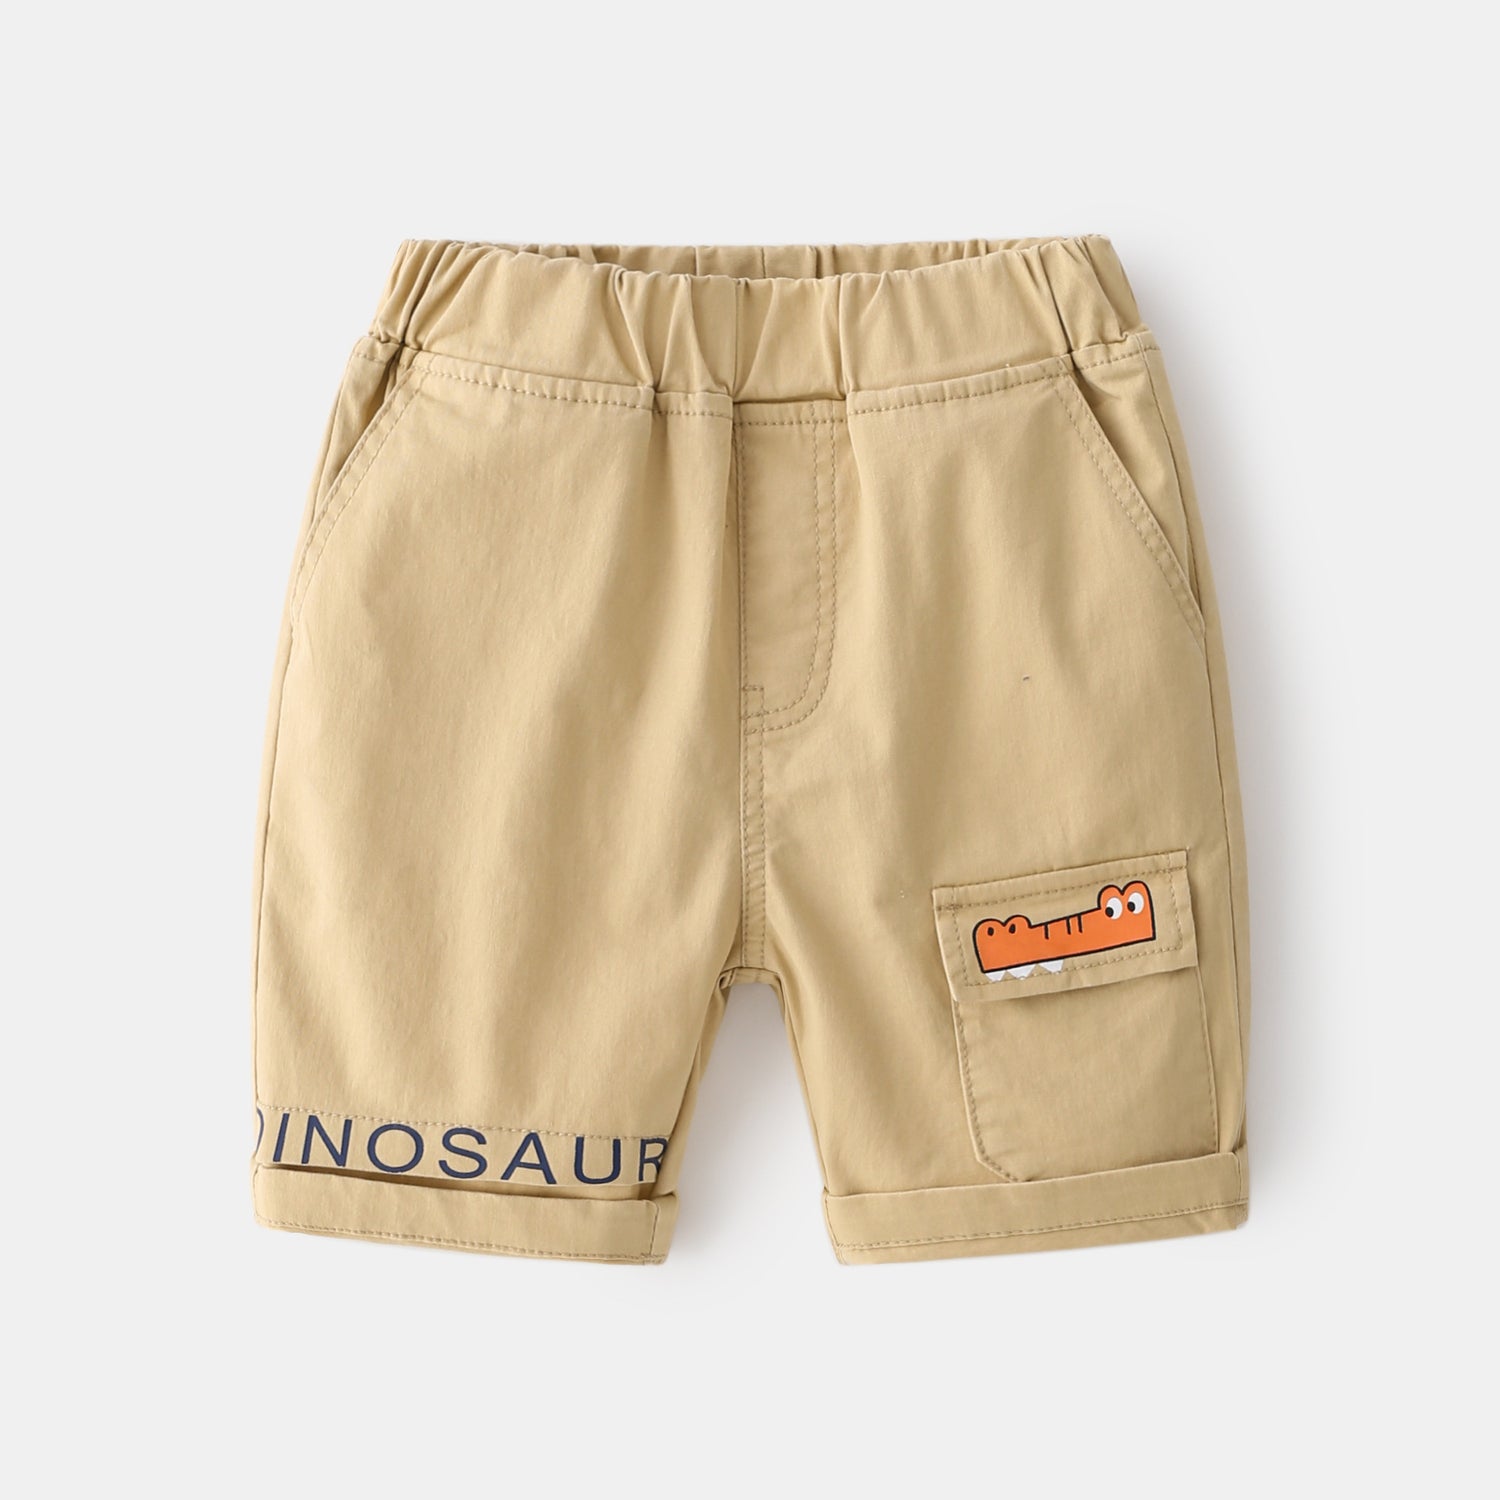 [513347] - Celana Pendek Fashion Anak Import - Motif Crocodile Pocket